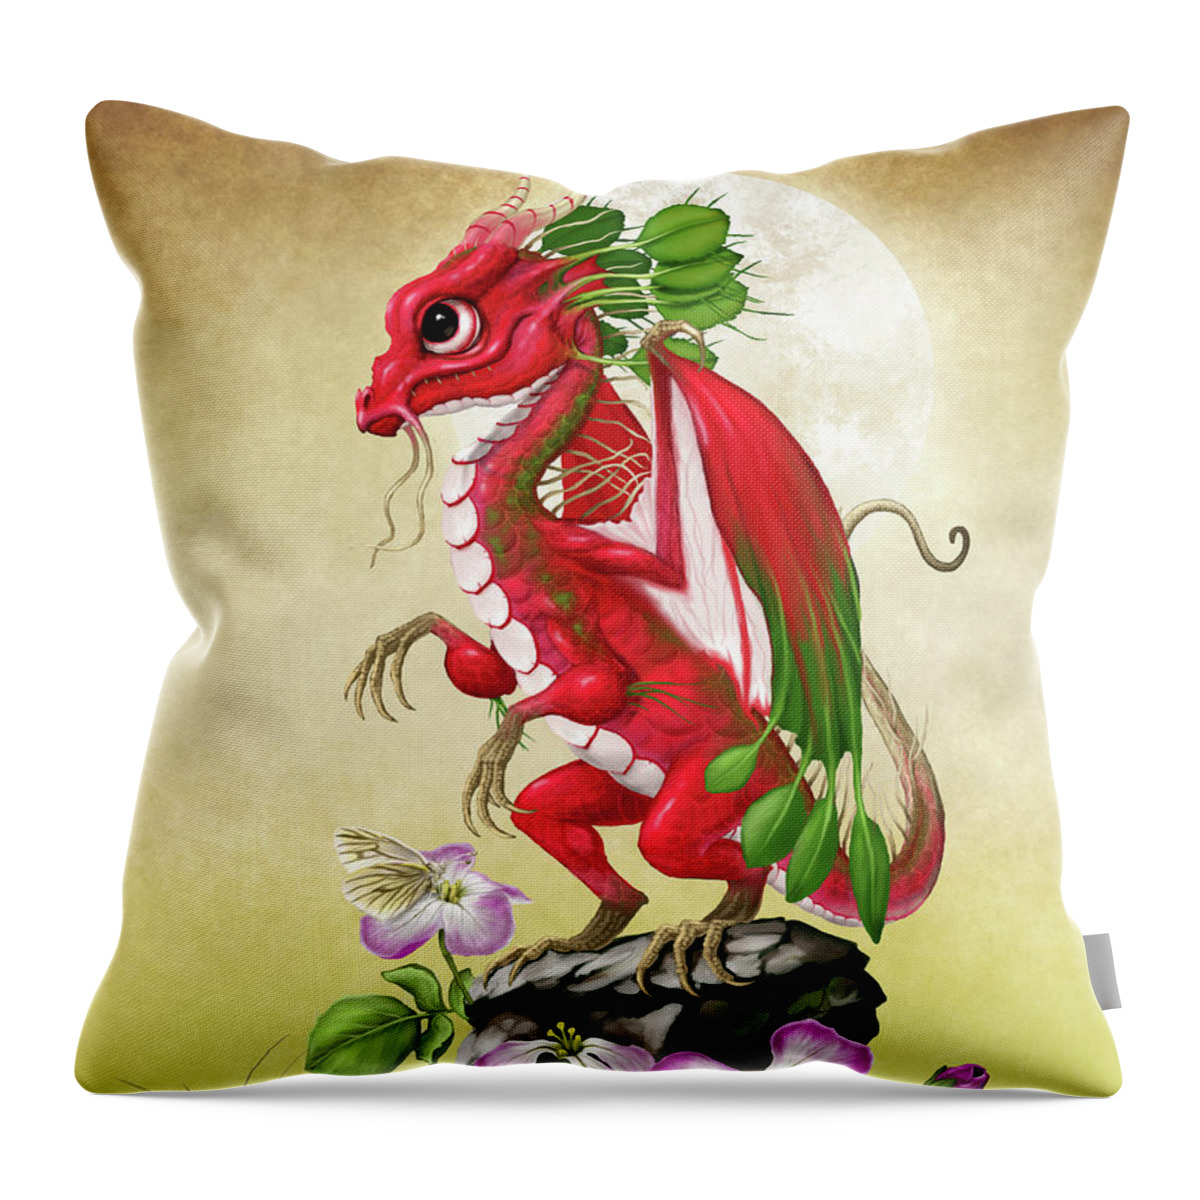 Radish Throw Pillow featuring the digital art Radish Dragon by Stanley Morrison